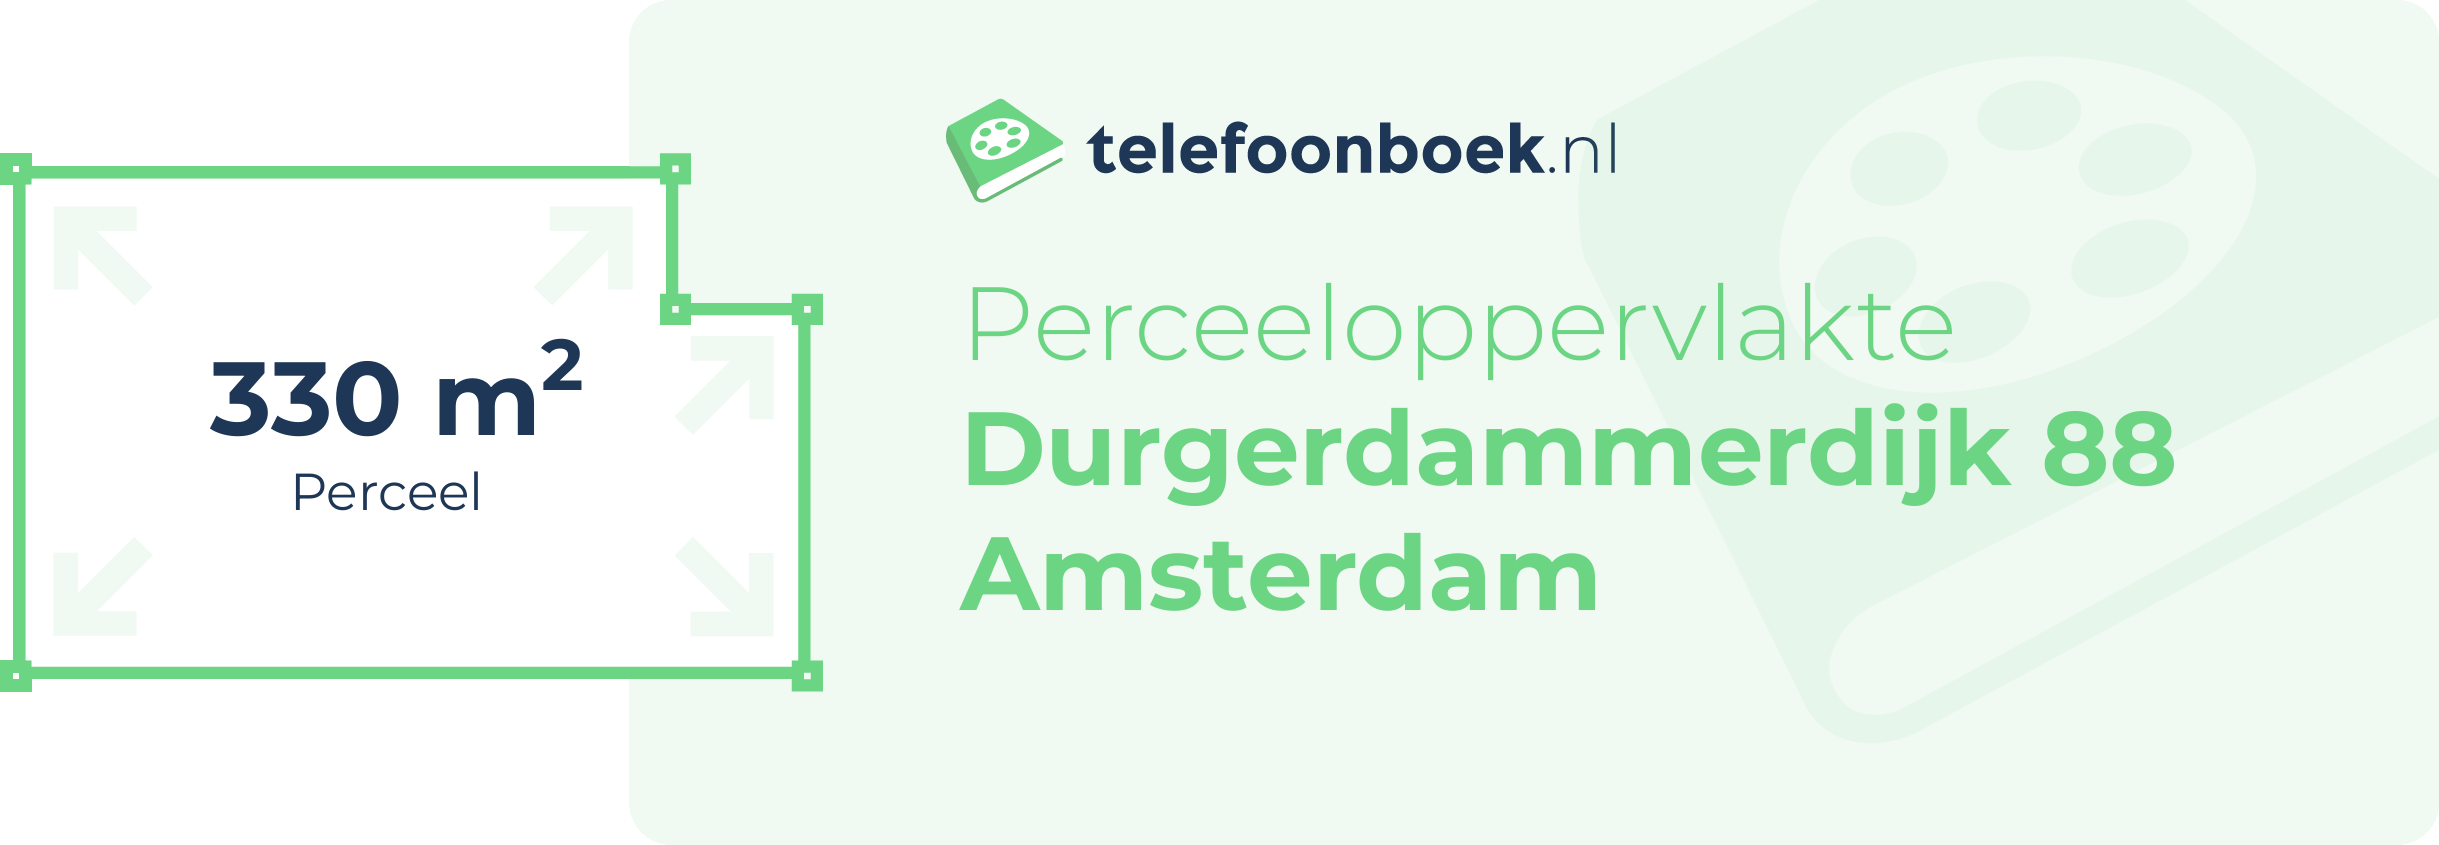 Perceeloppervlakte Durgerdammerdijk 88 Amsterdam